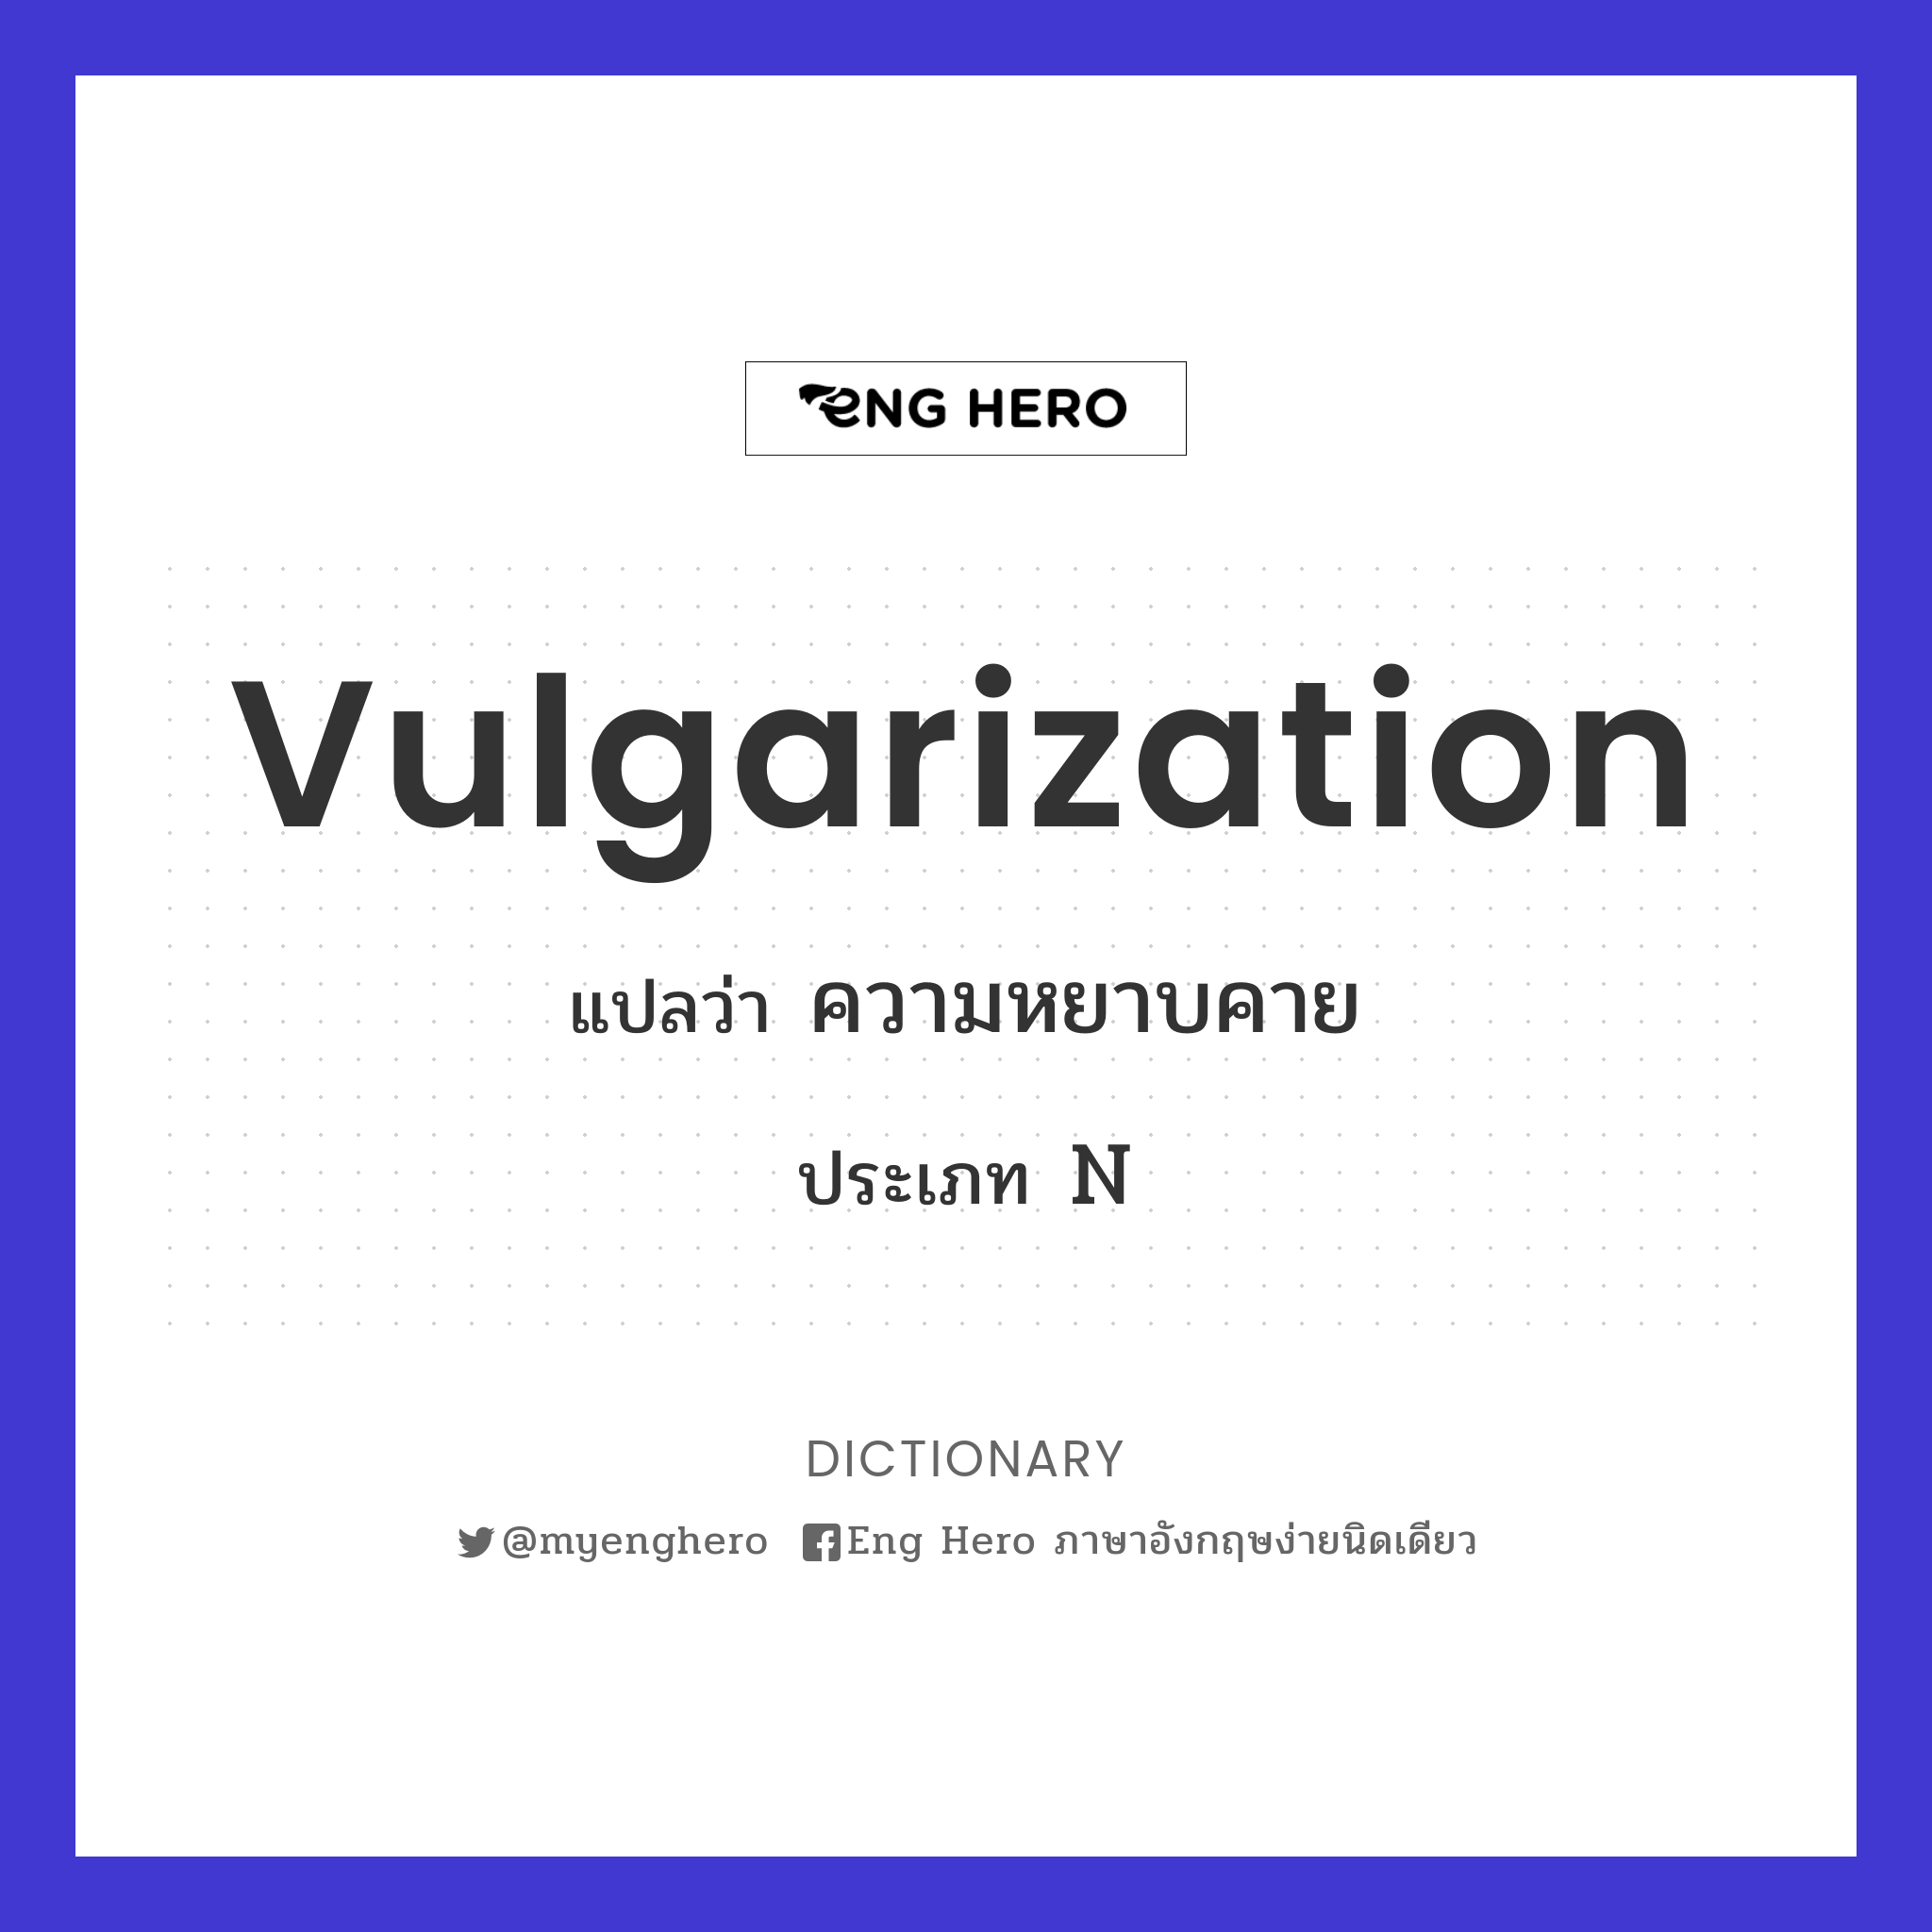 vulgarization